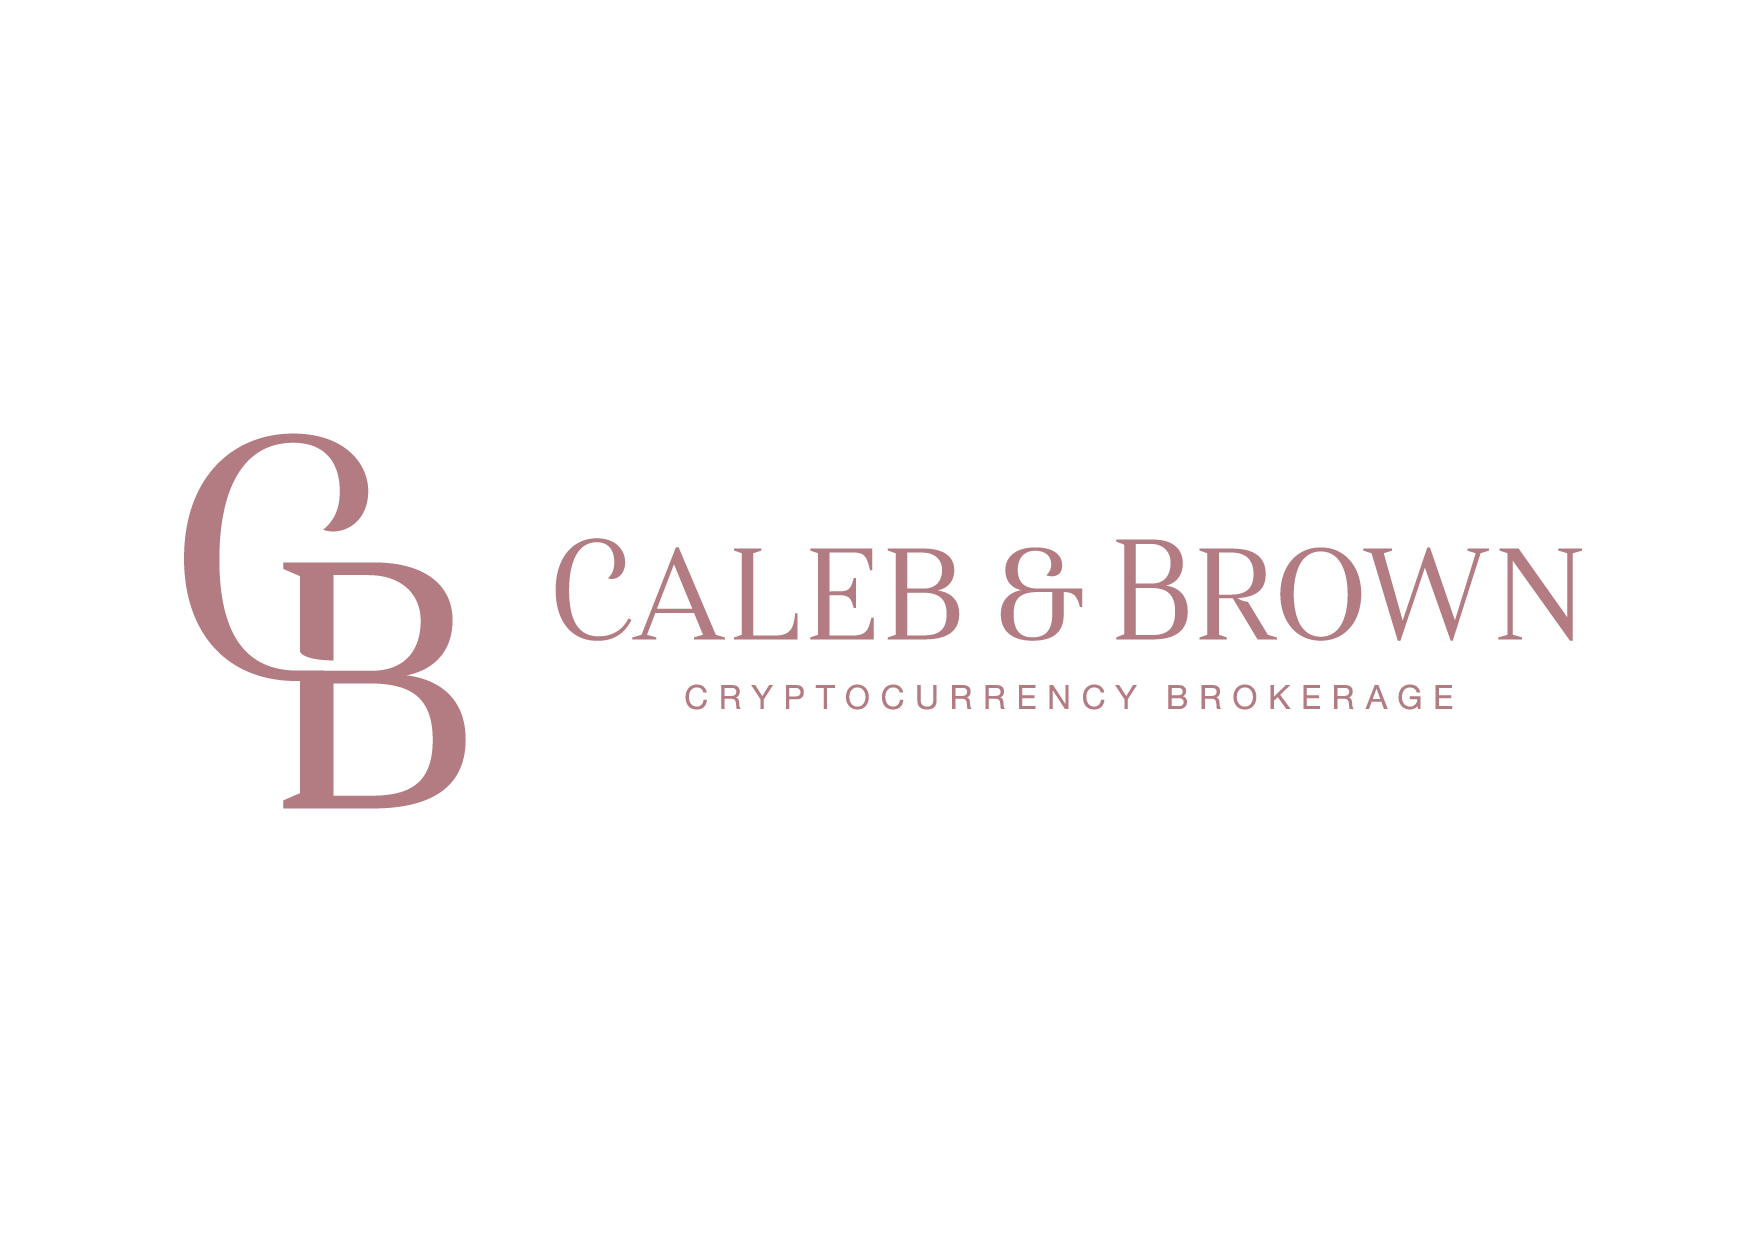 Caleb & Brown correct 2022 logo